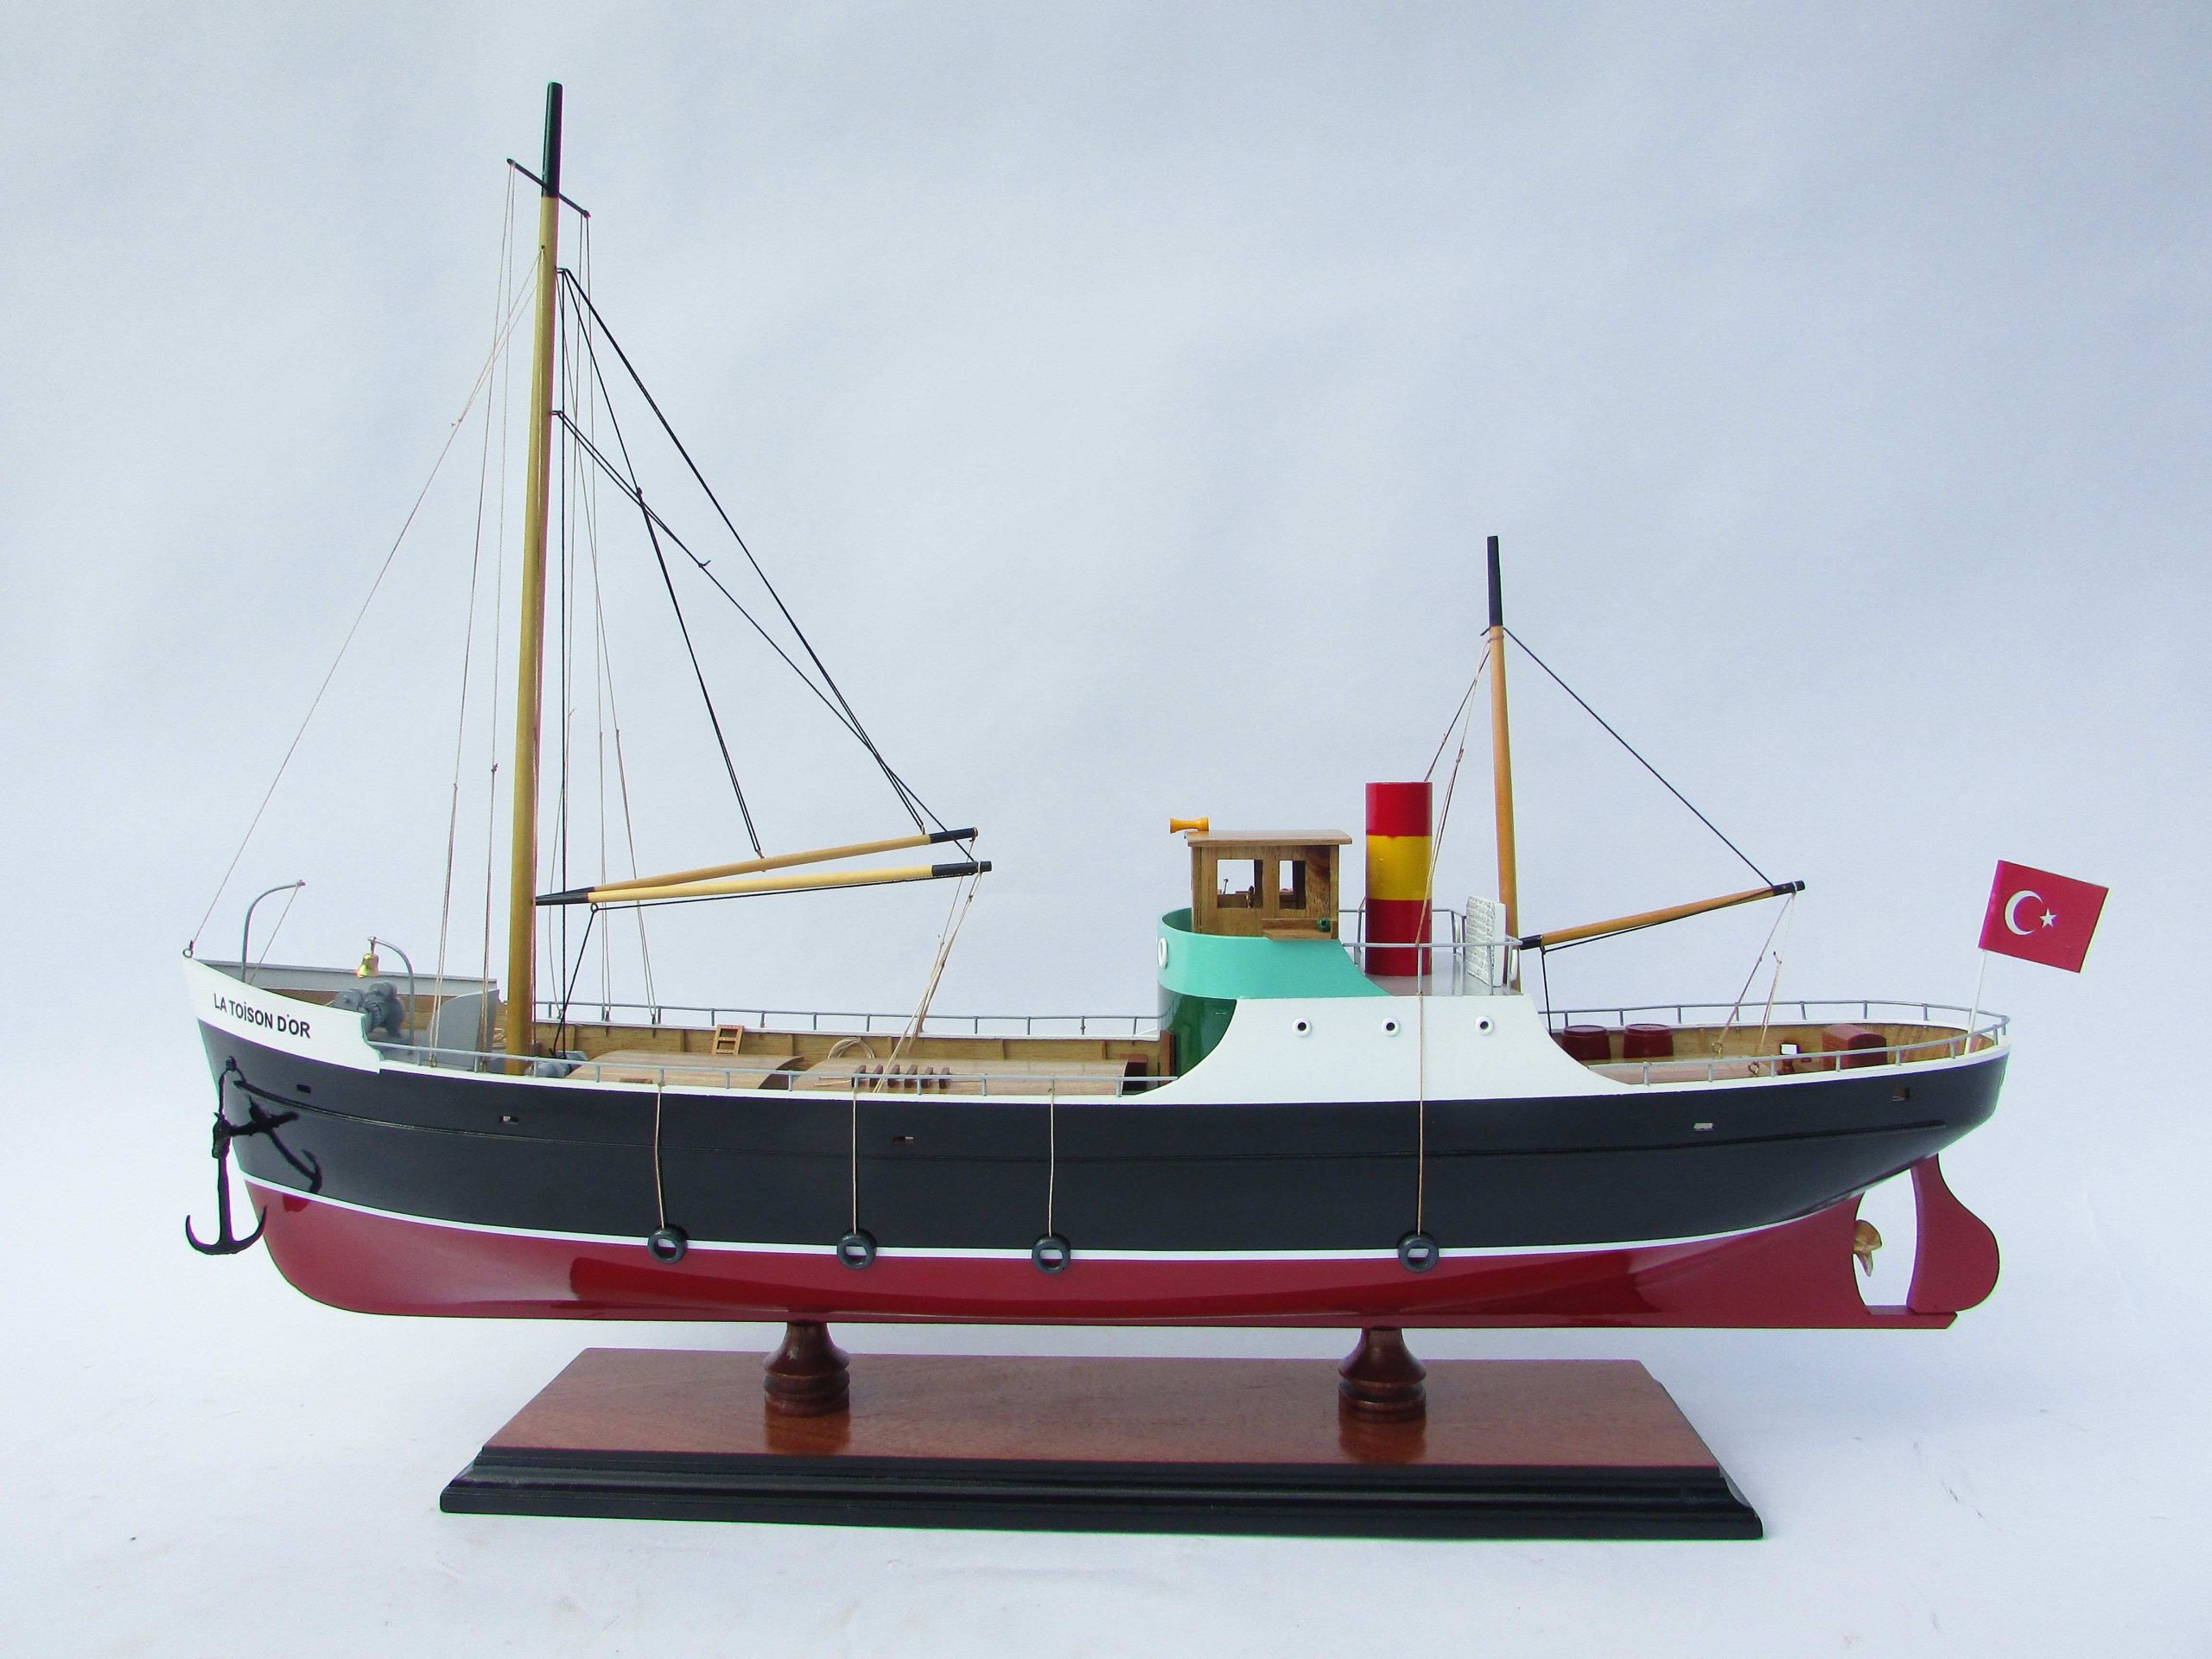 La Toison D'or Tintin Model Ship - GN